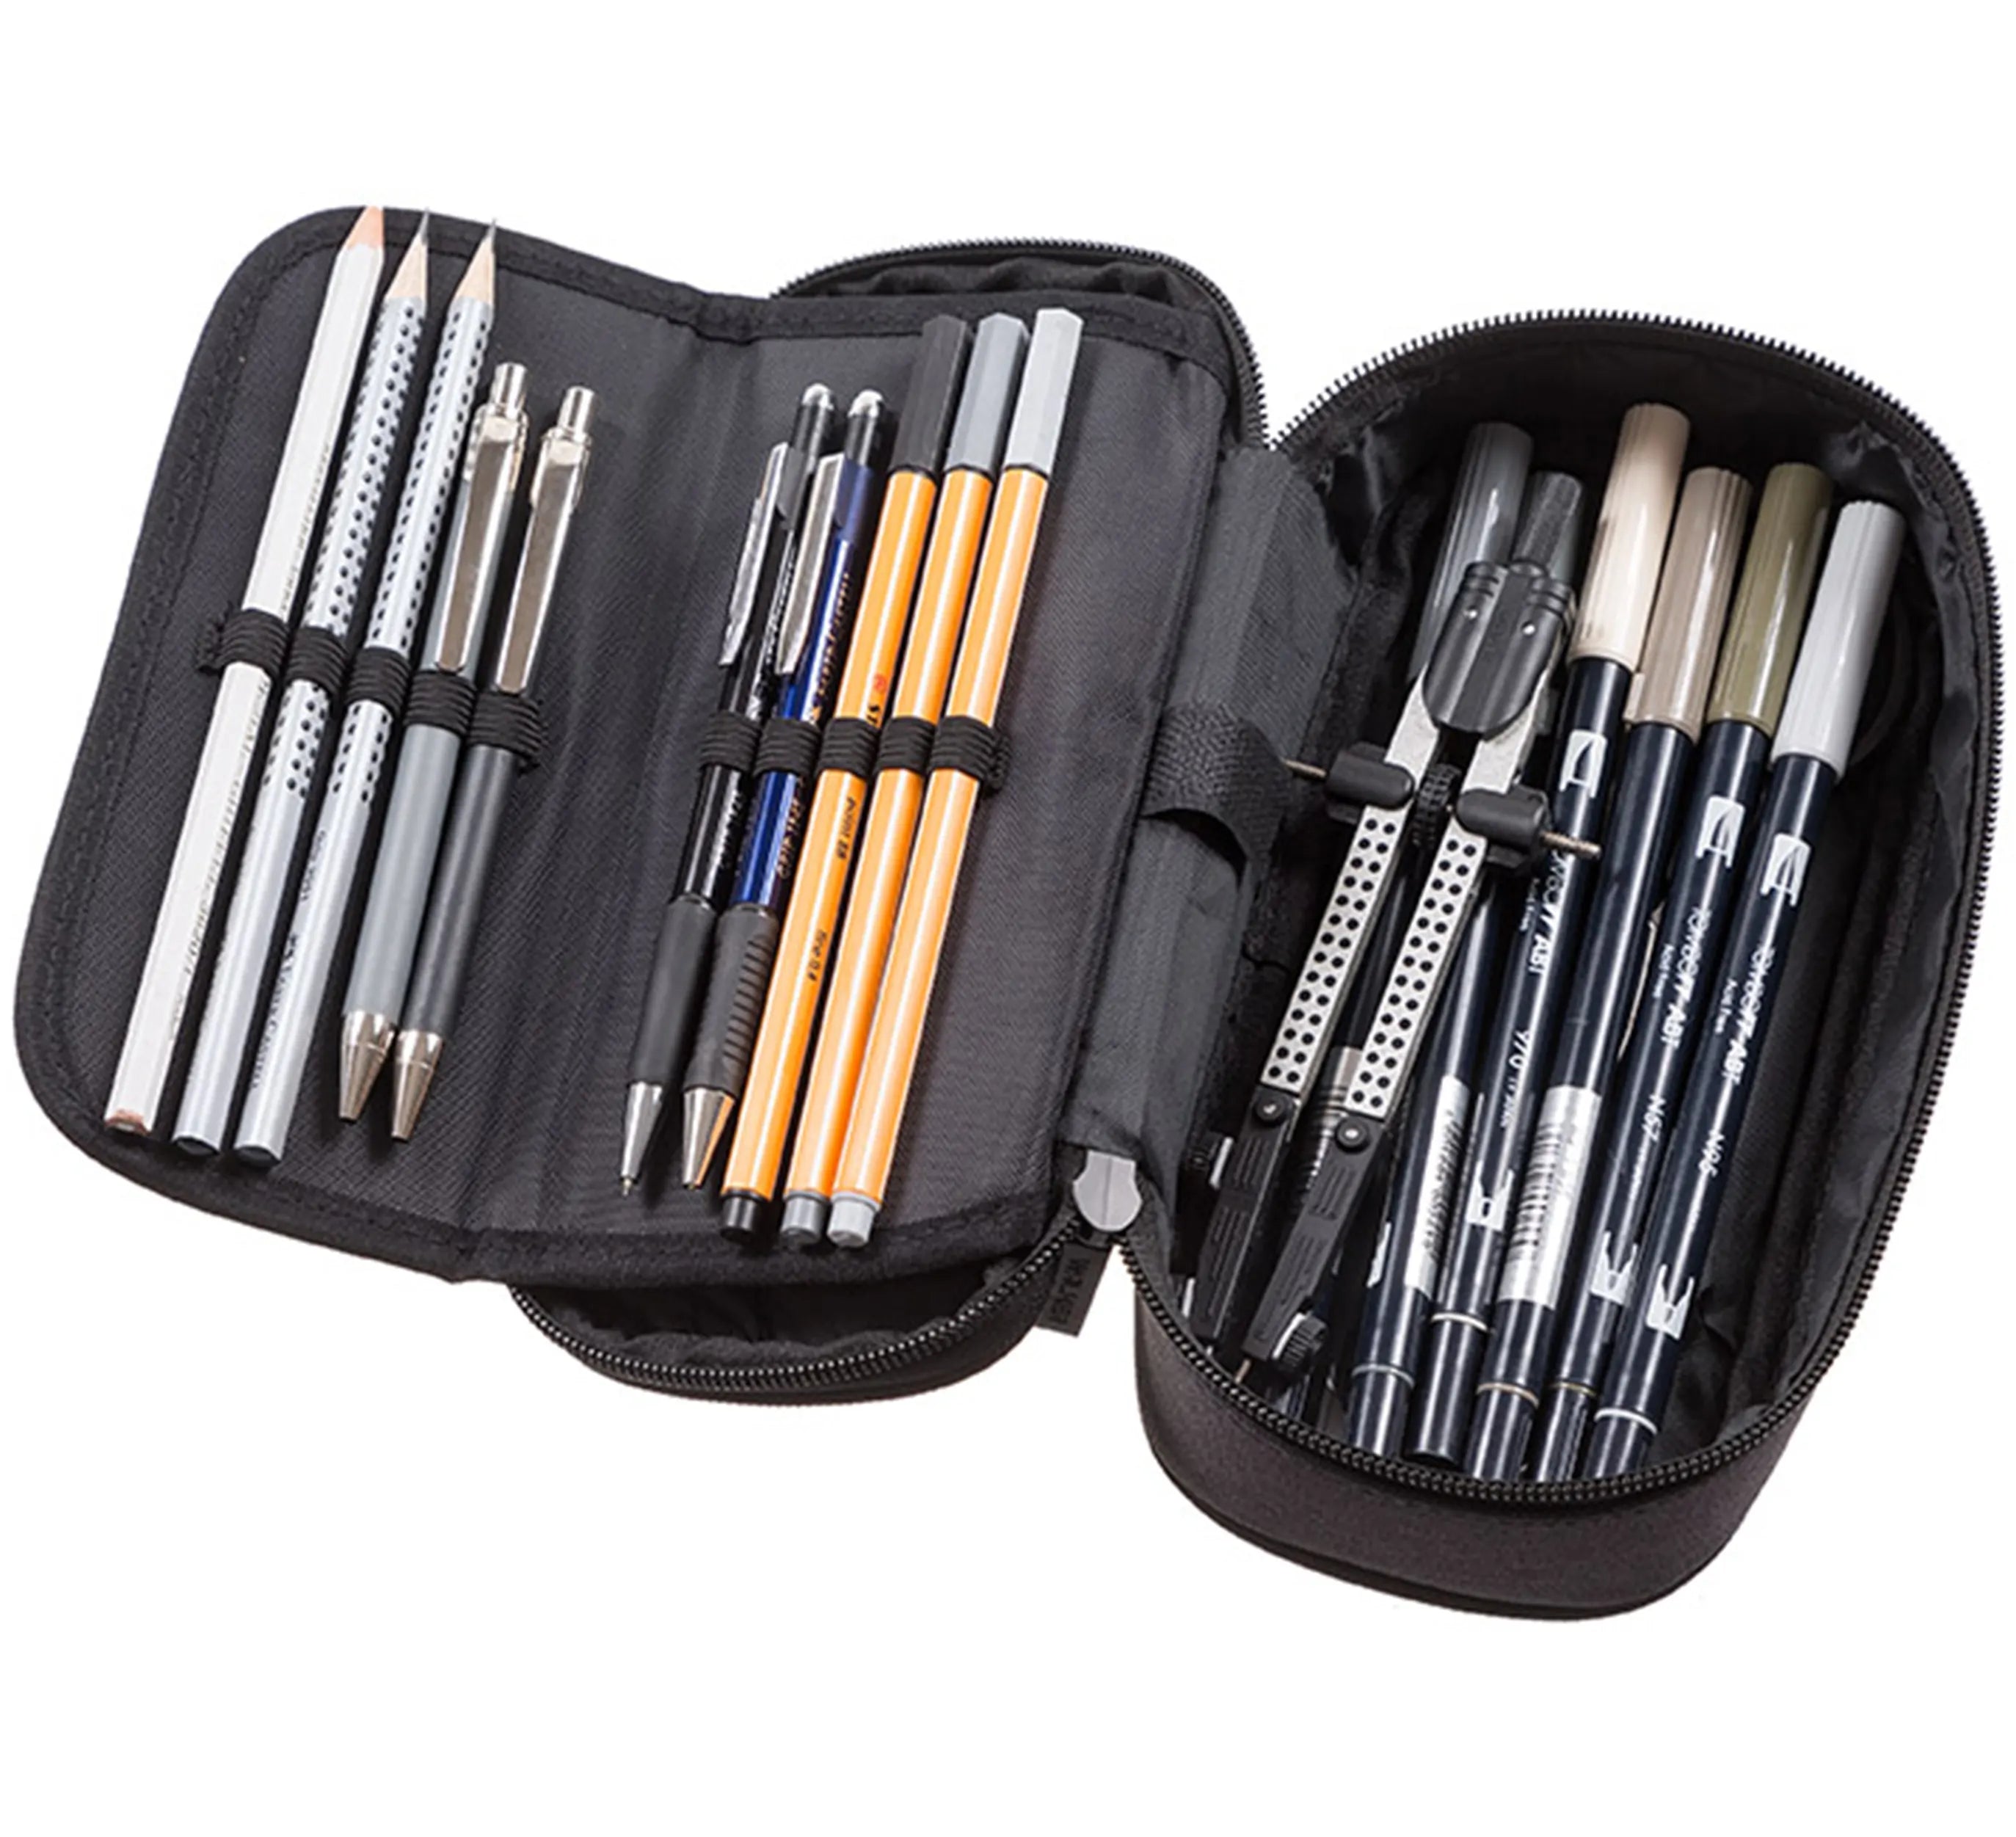 Walker Bags Pencil Box Concept 21 cm - Black